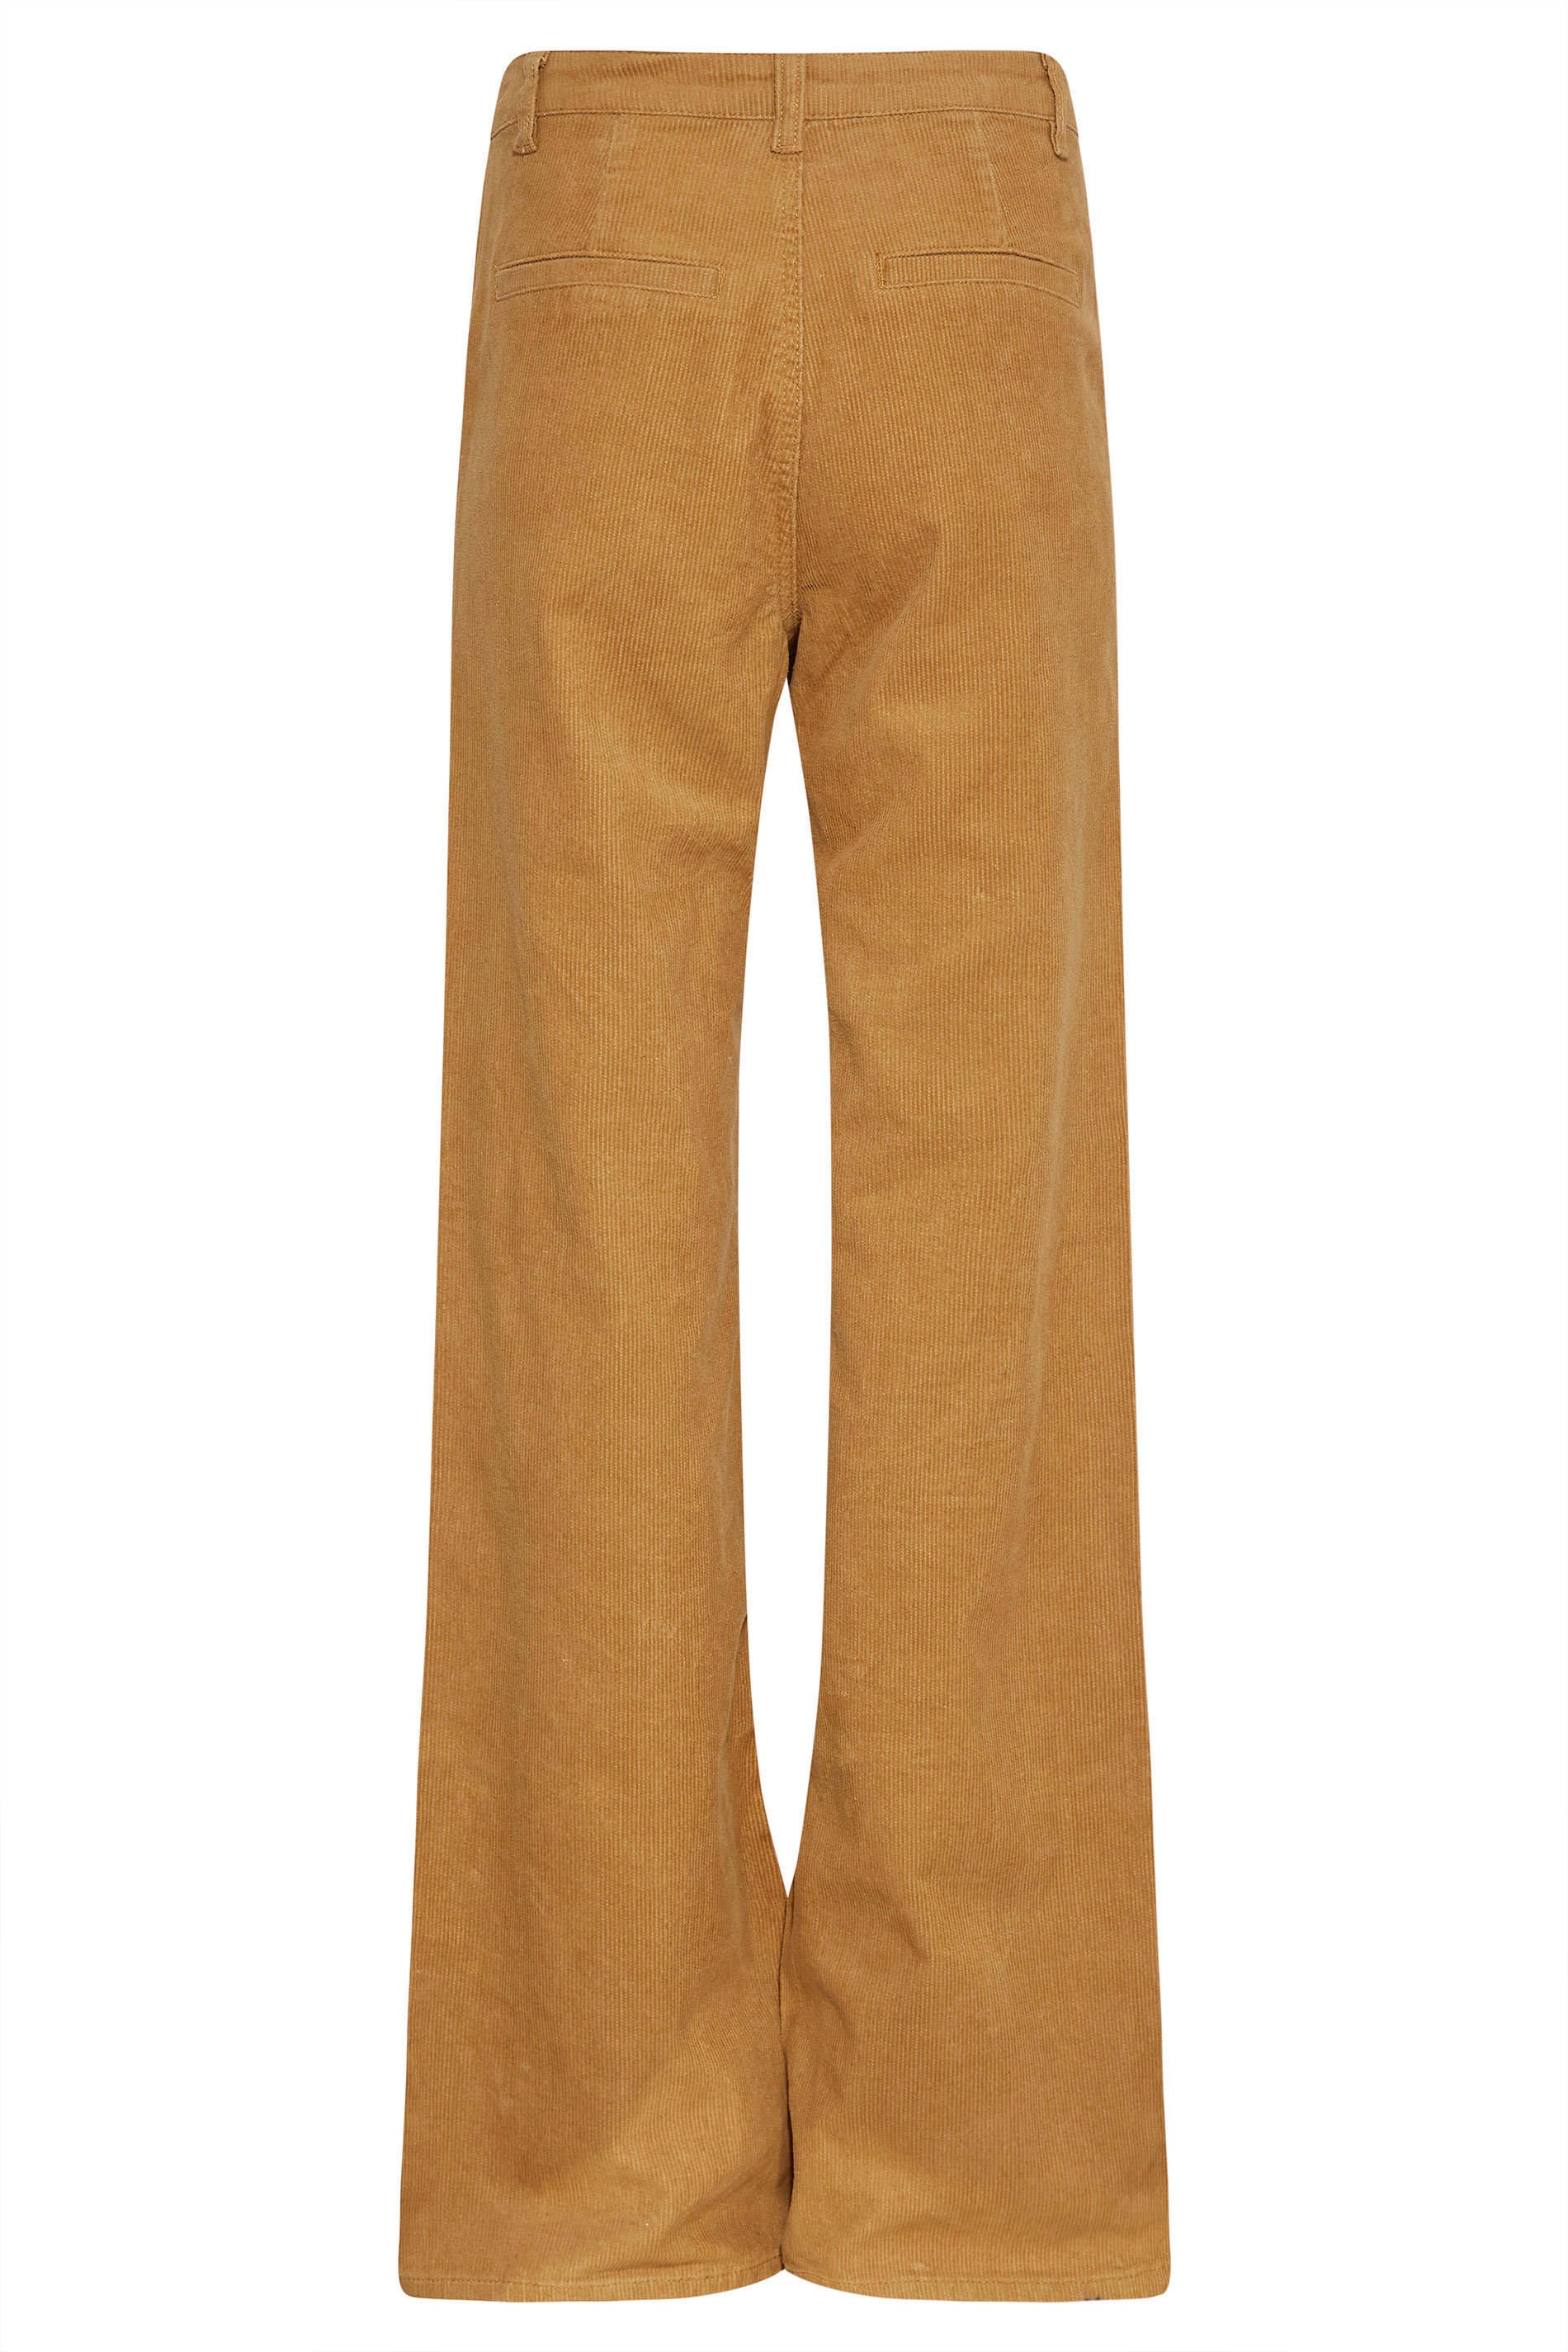 Tall Women's LTS Camel Brown Wide Leg Cord Trousers | Long Tall Sally